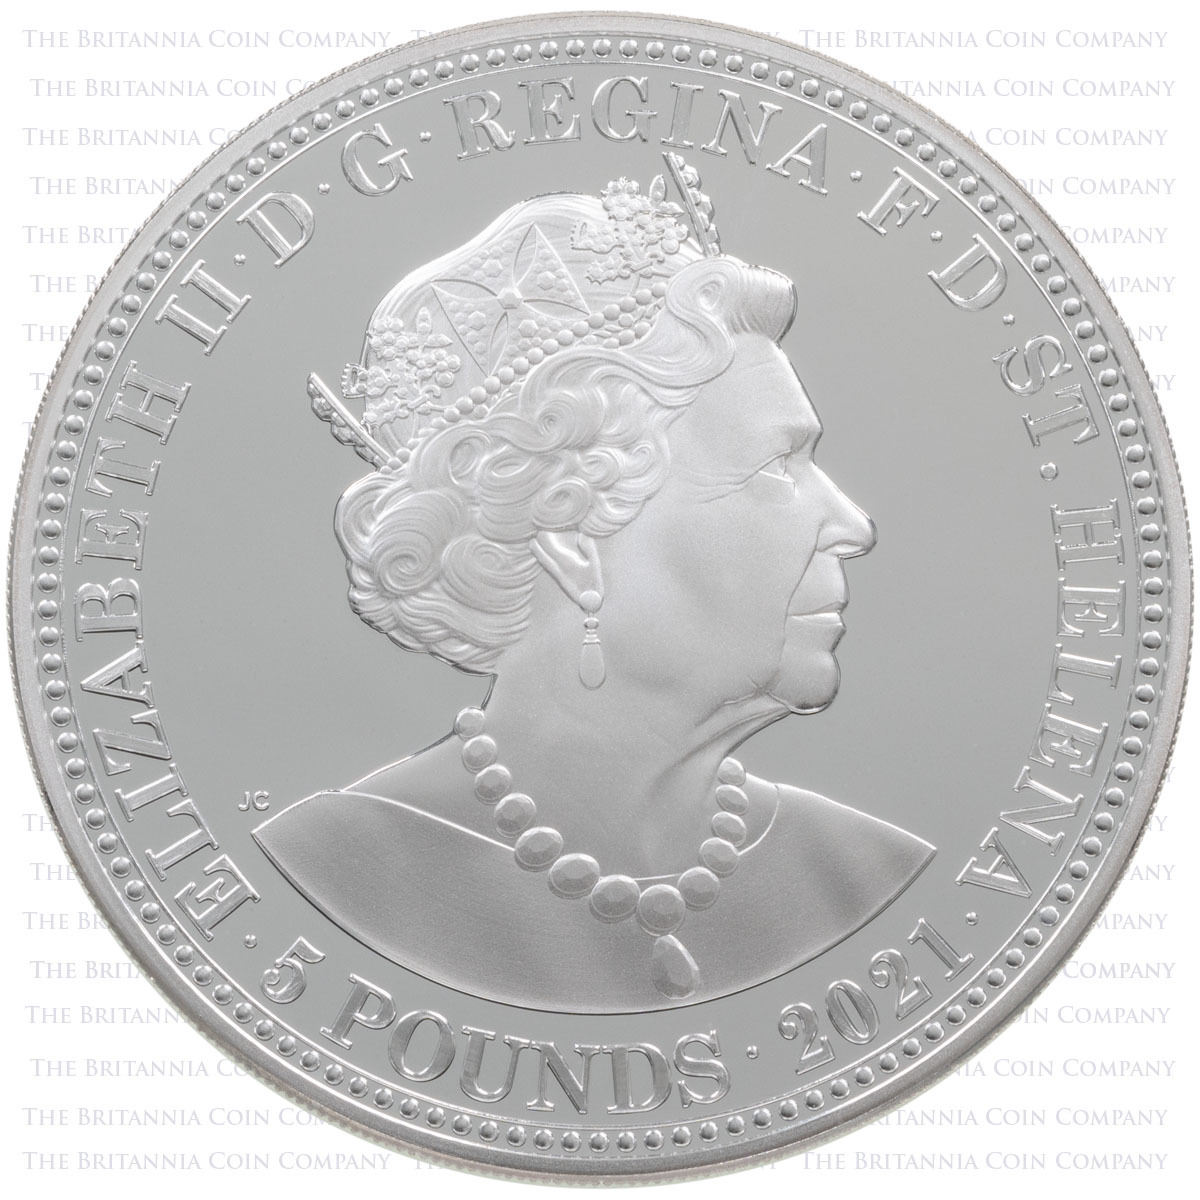 FG21GRASP5OZ 2021 Saint Helena Three Graces Five Ounce Silver Proof Coin Obverse